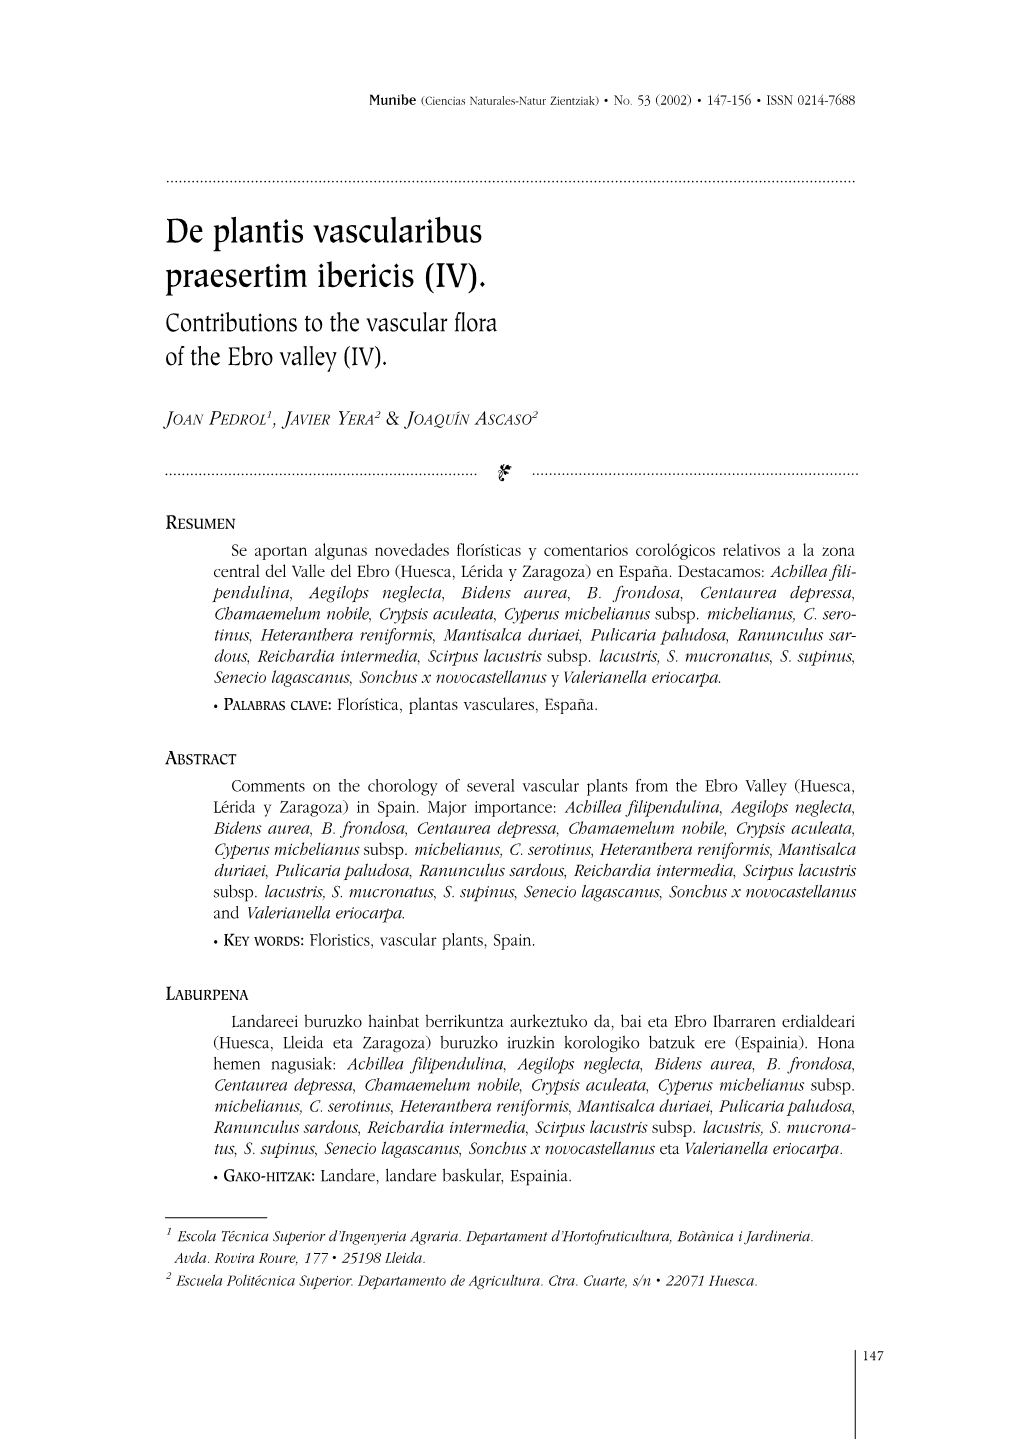 De Plantis Vascularibus Praesertim Ibericis (IV). Contributions to the Vascular Flora of the Ebro Valley (IV)